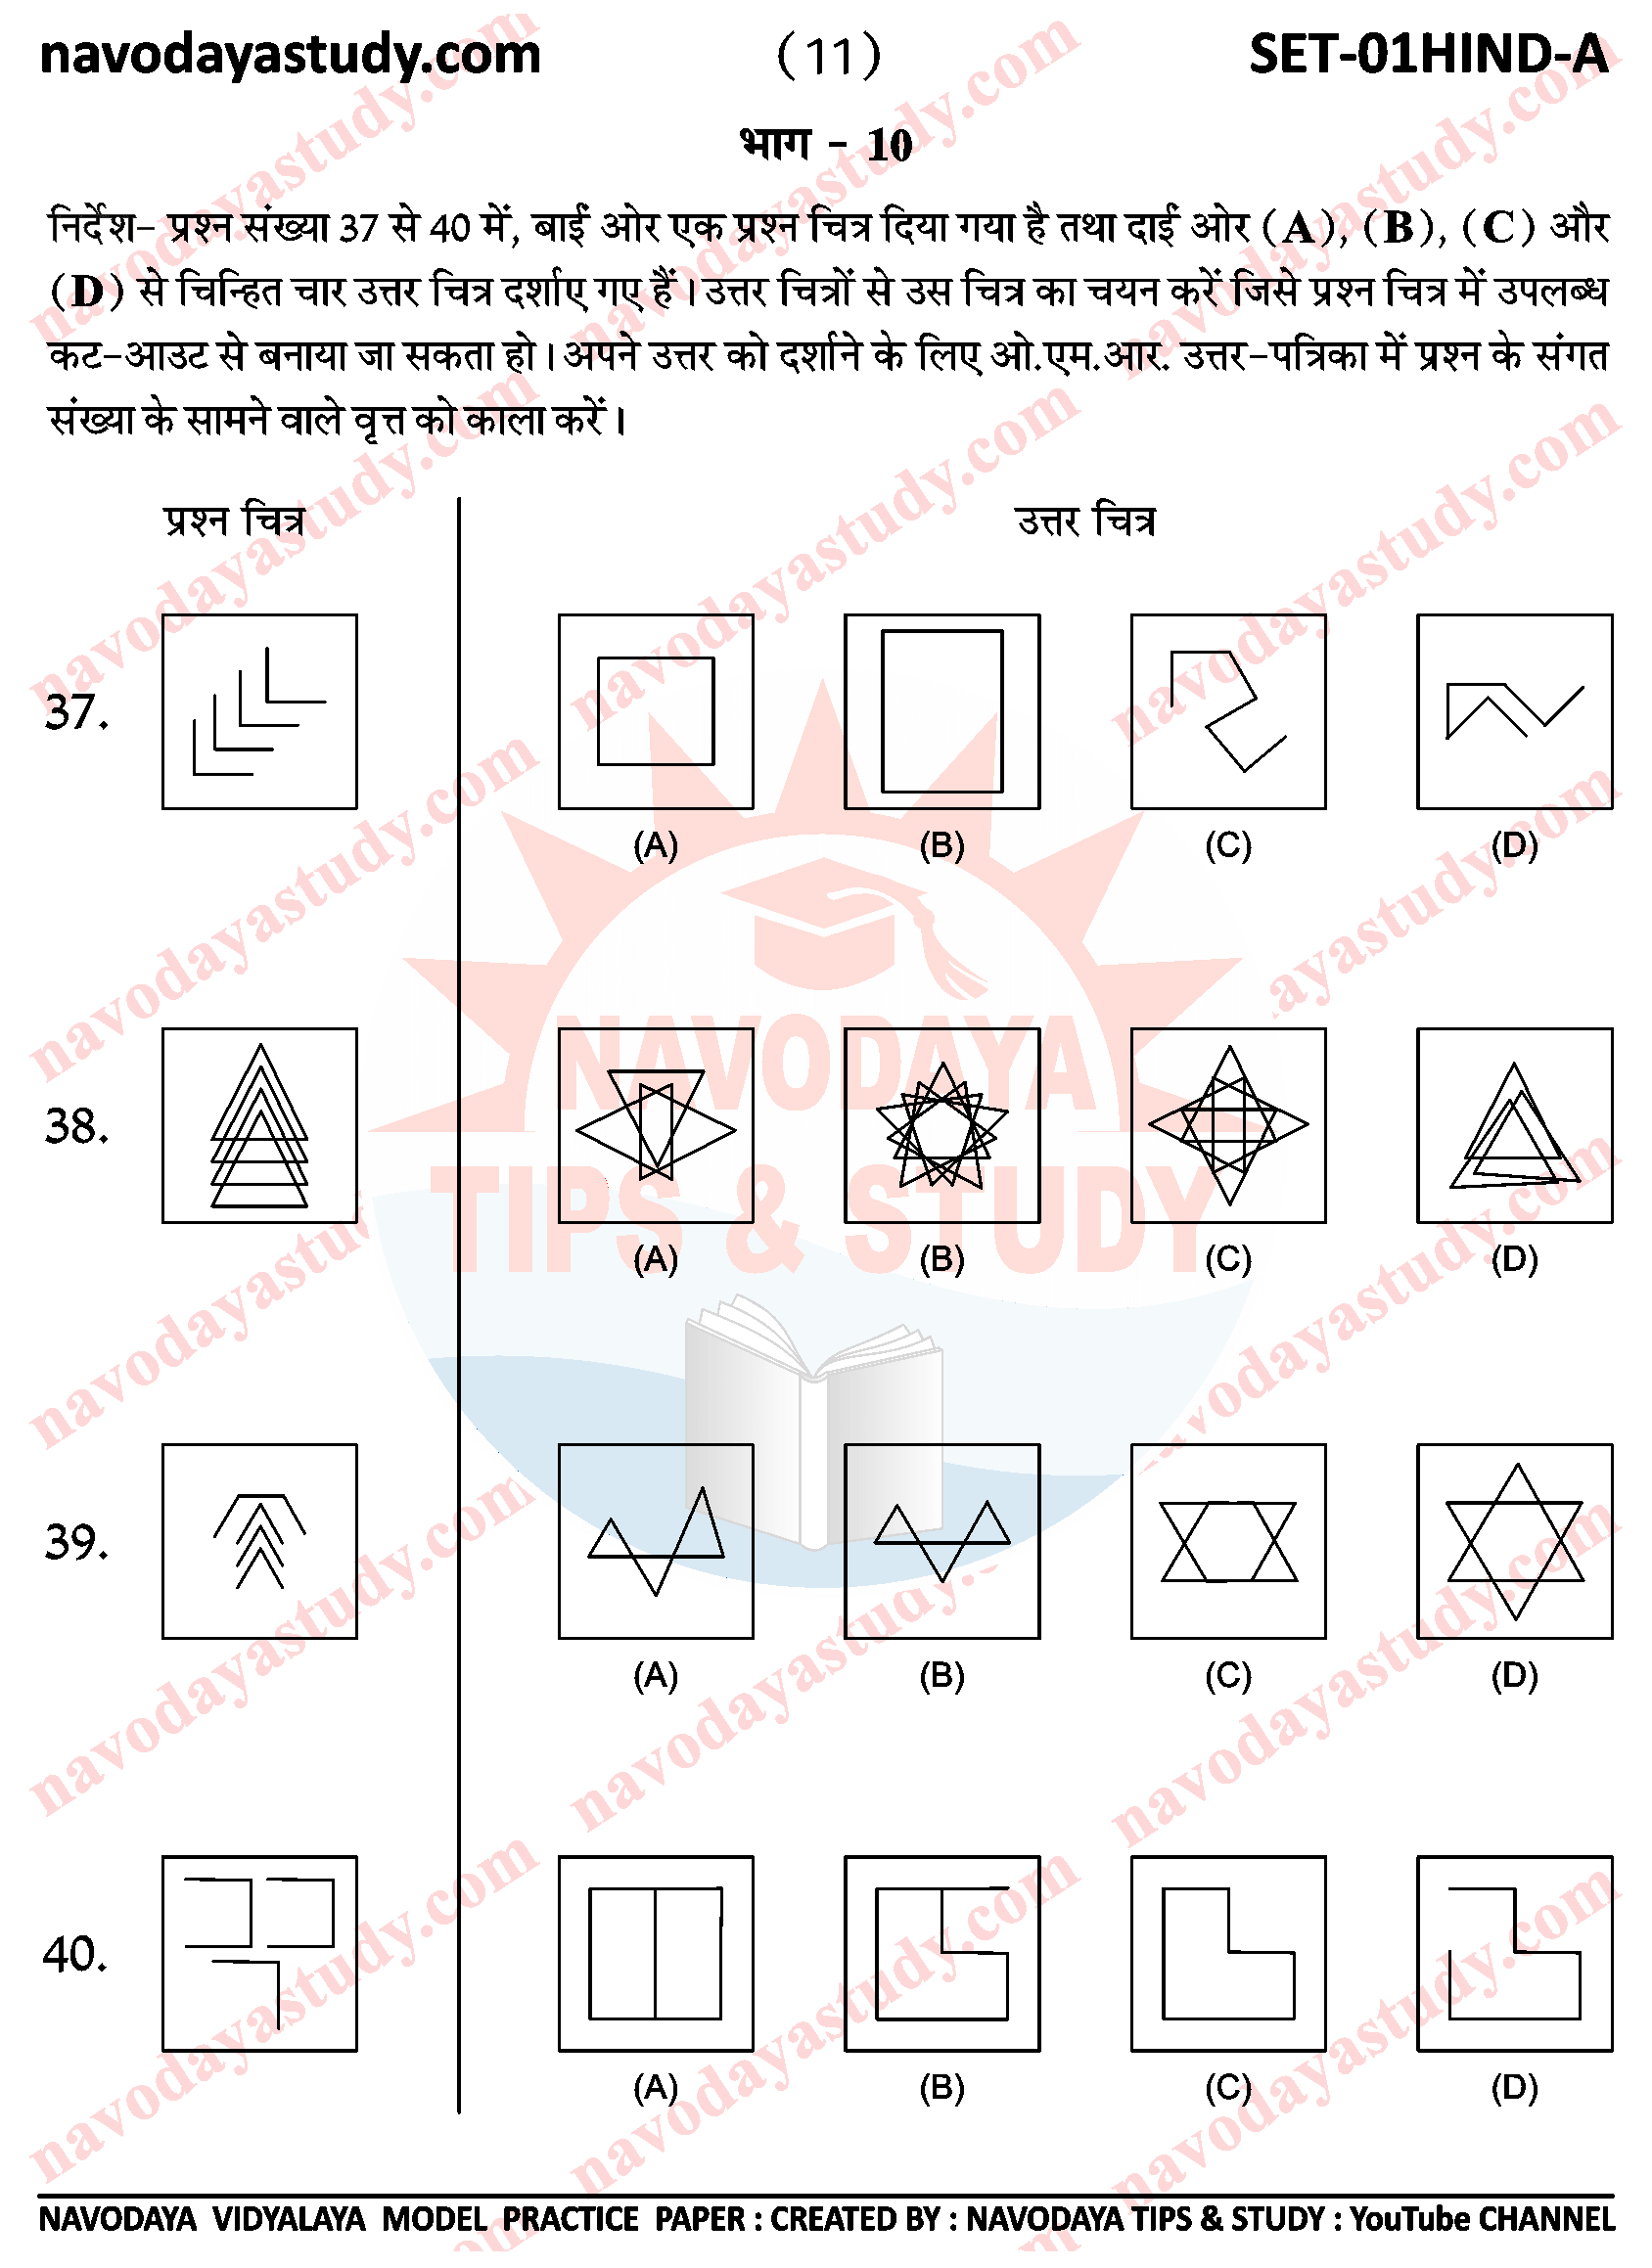 Navodaya Model Paper Class 6 (JNVST) Set - 1 Hind A Page - 11